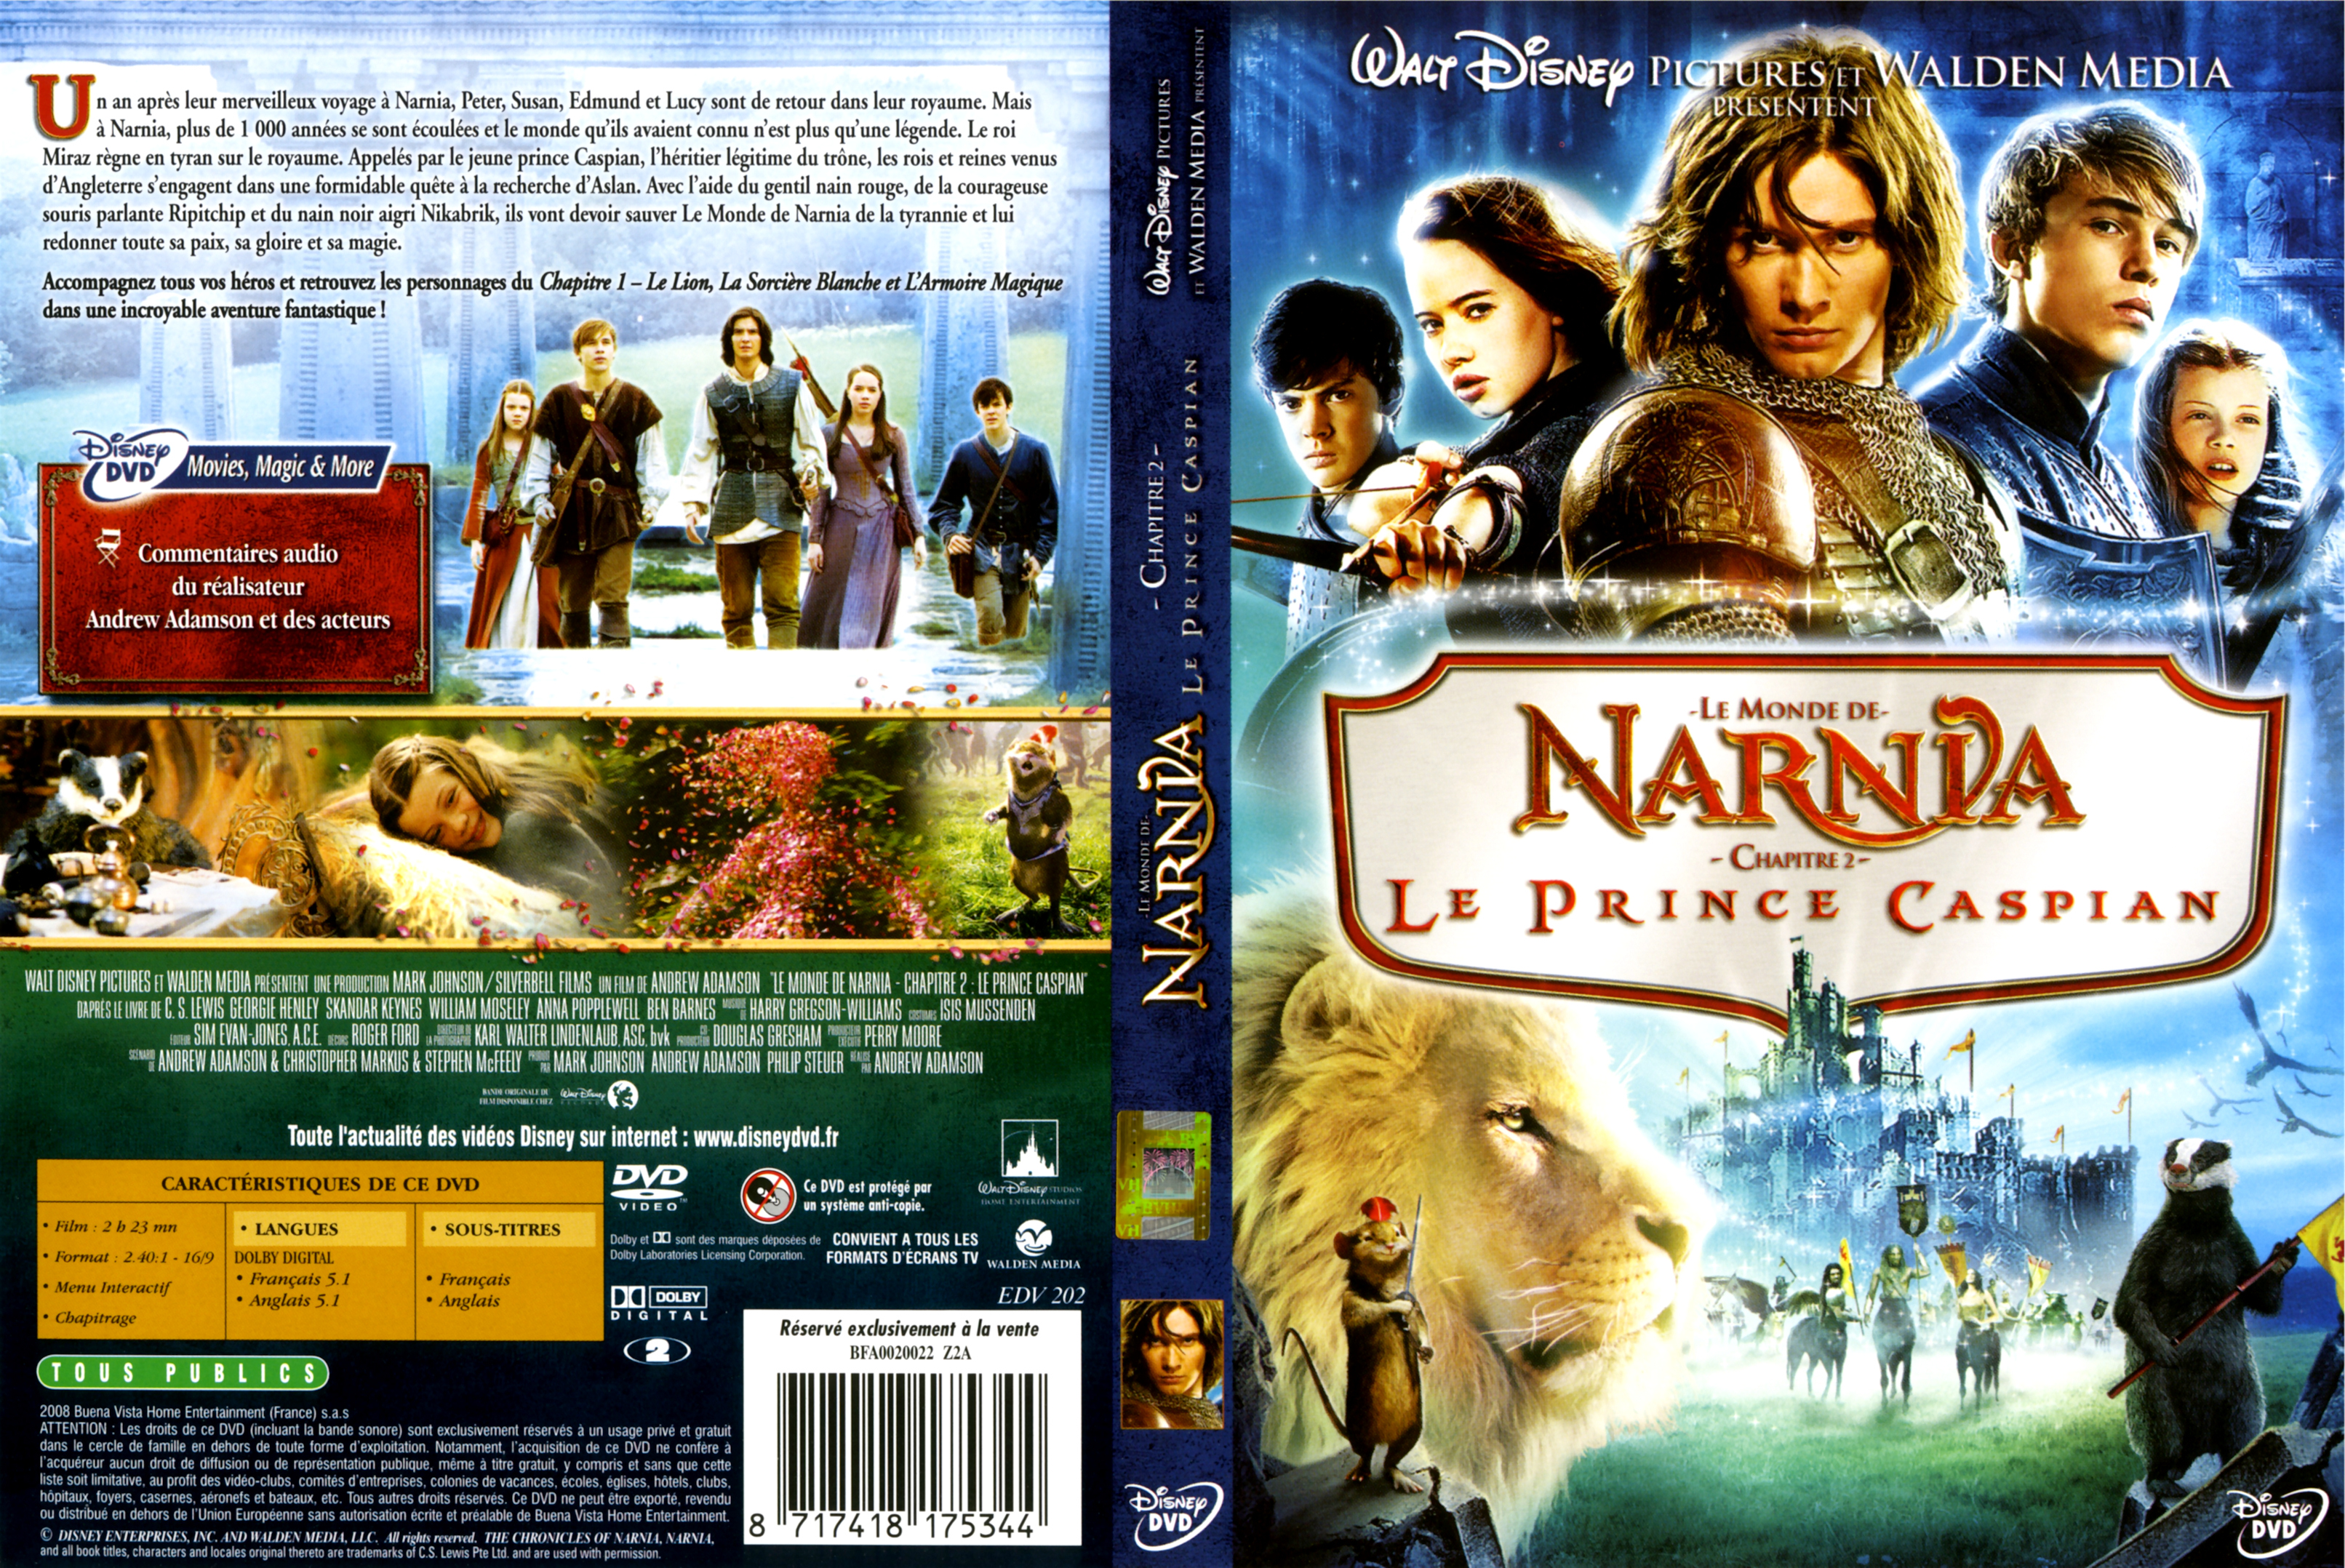 Jaquette DVD Le Monde de Narnia chapitre 2 - Prince Caspian